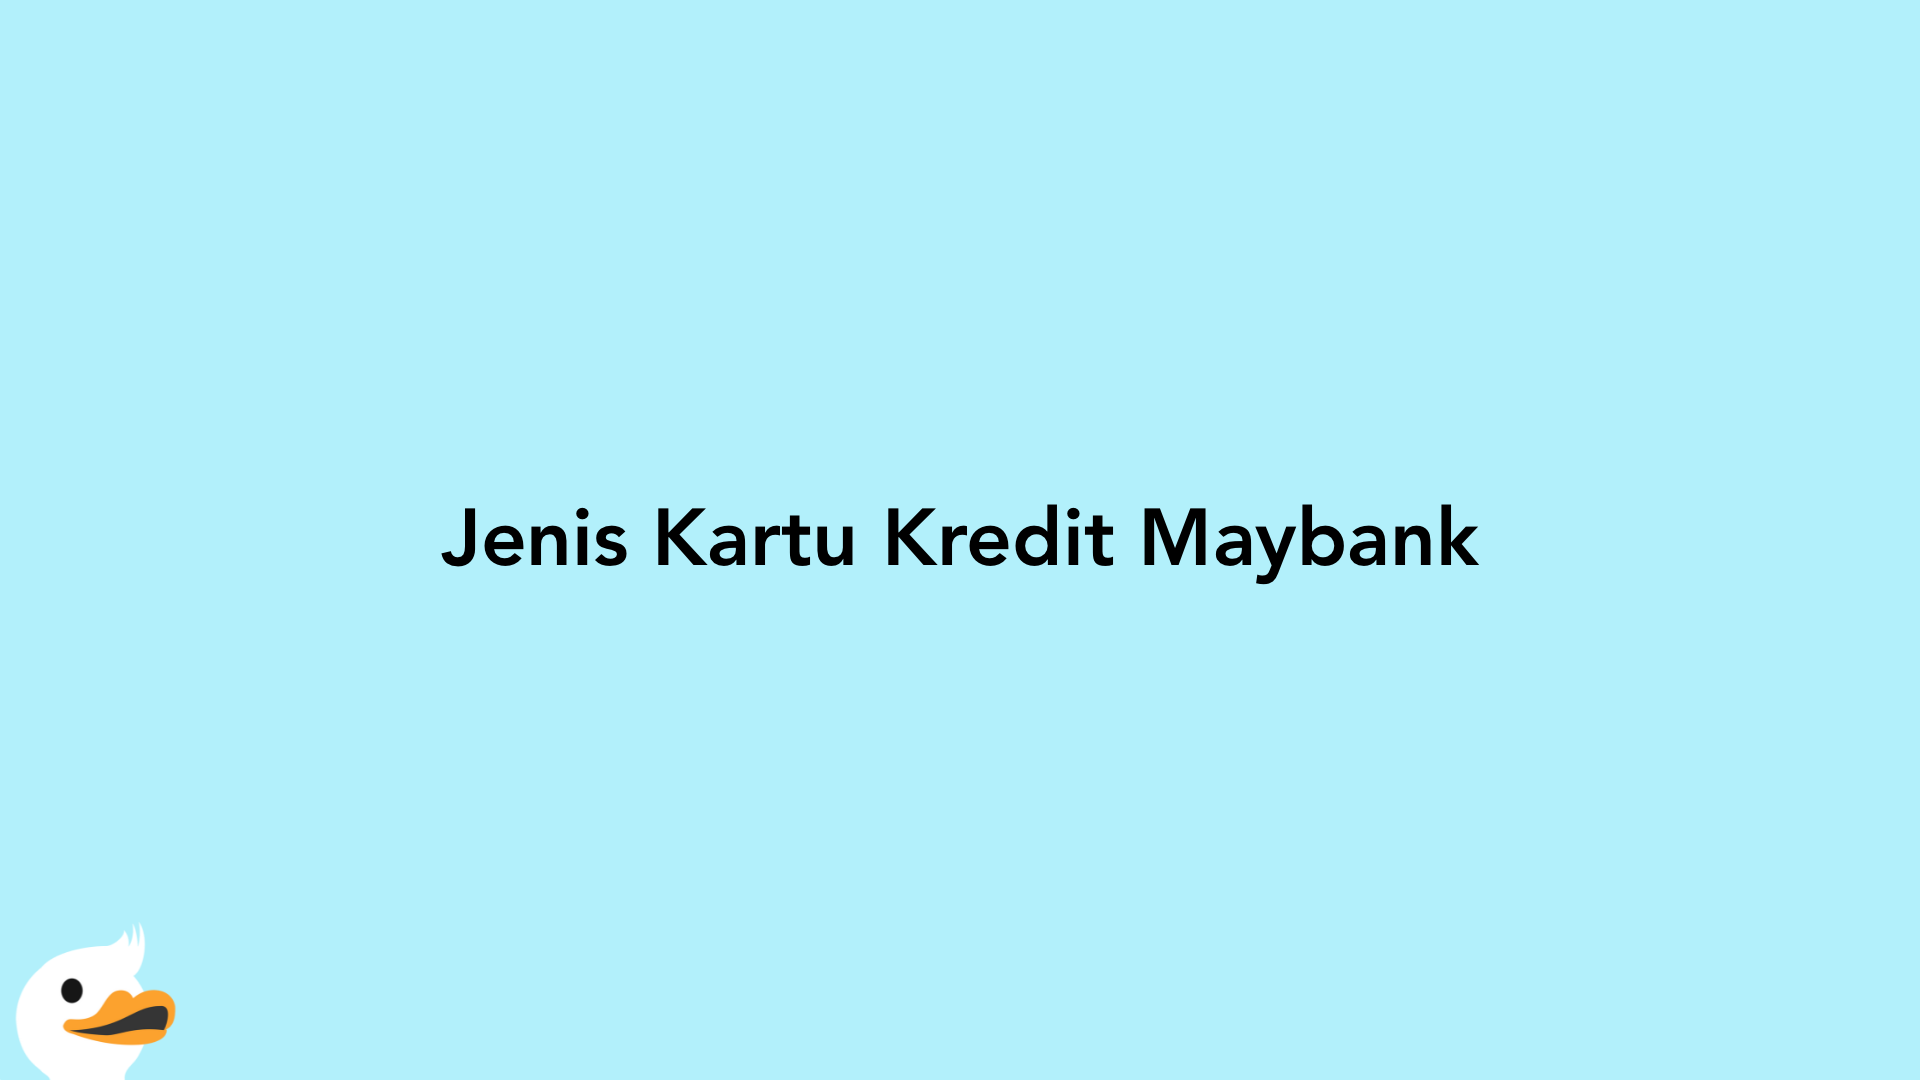 Jenis Kartu Kredit Maybank